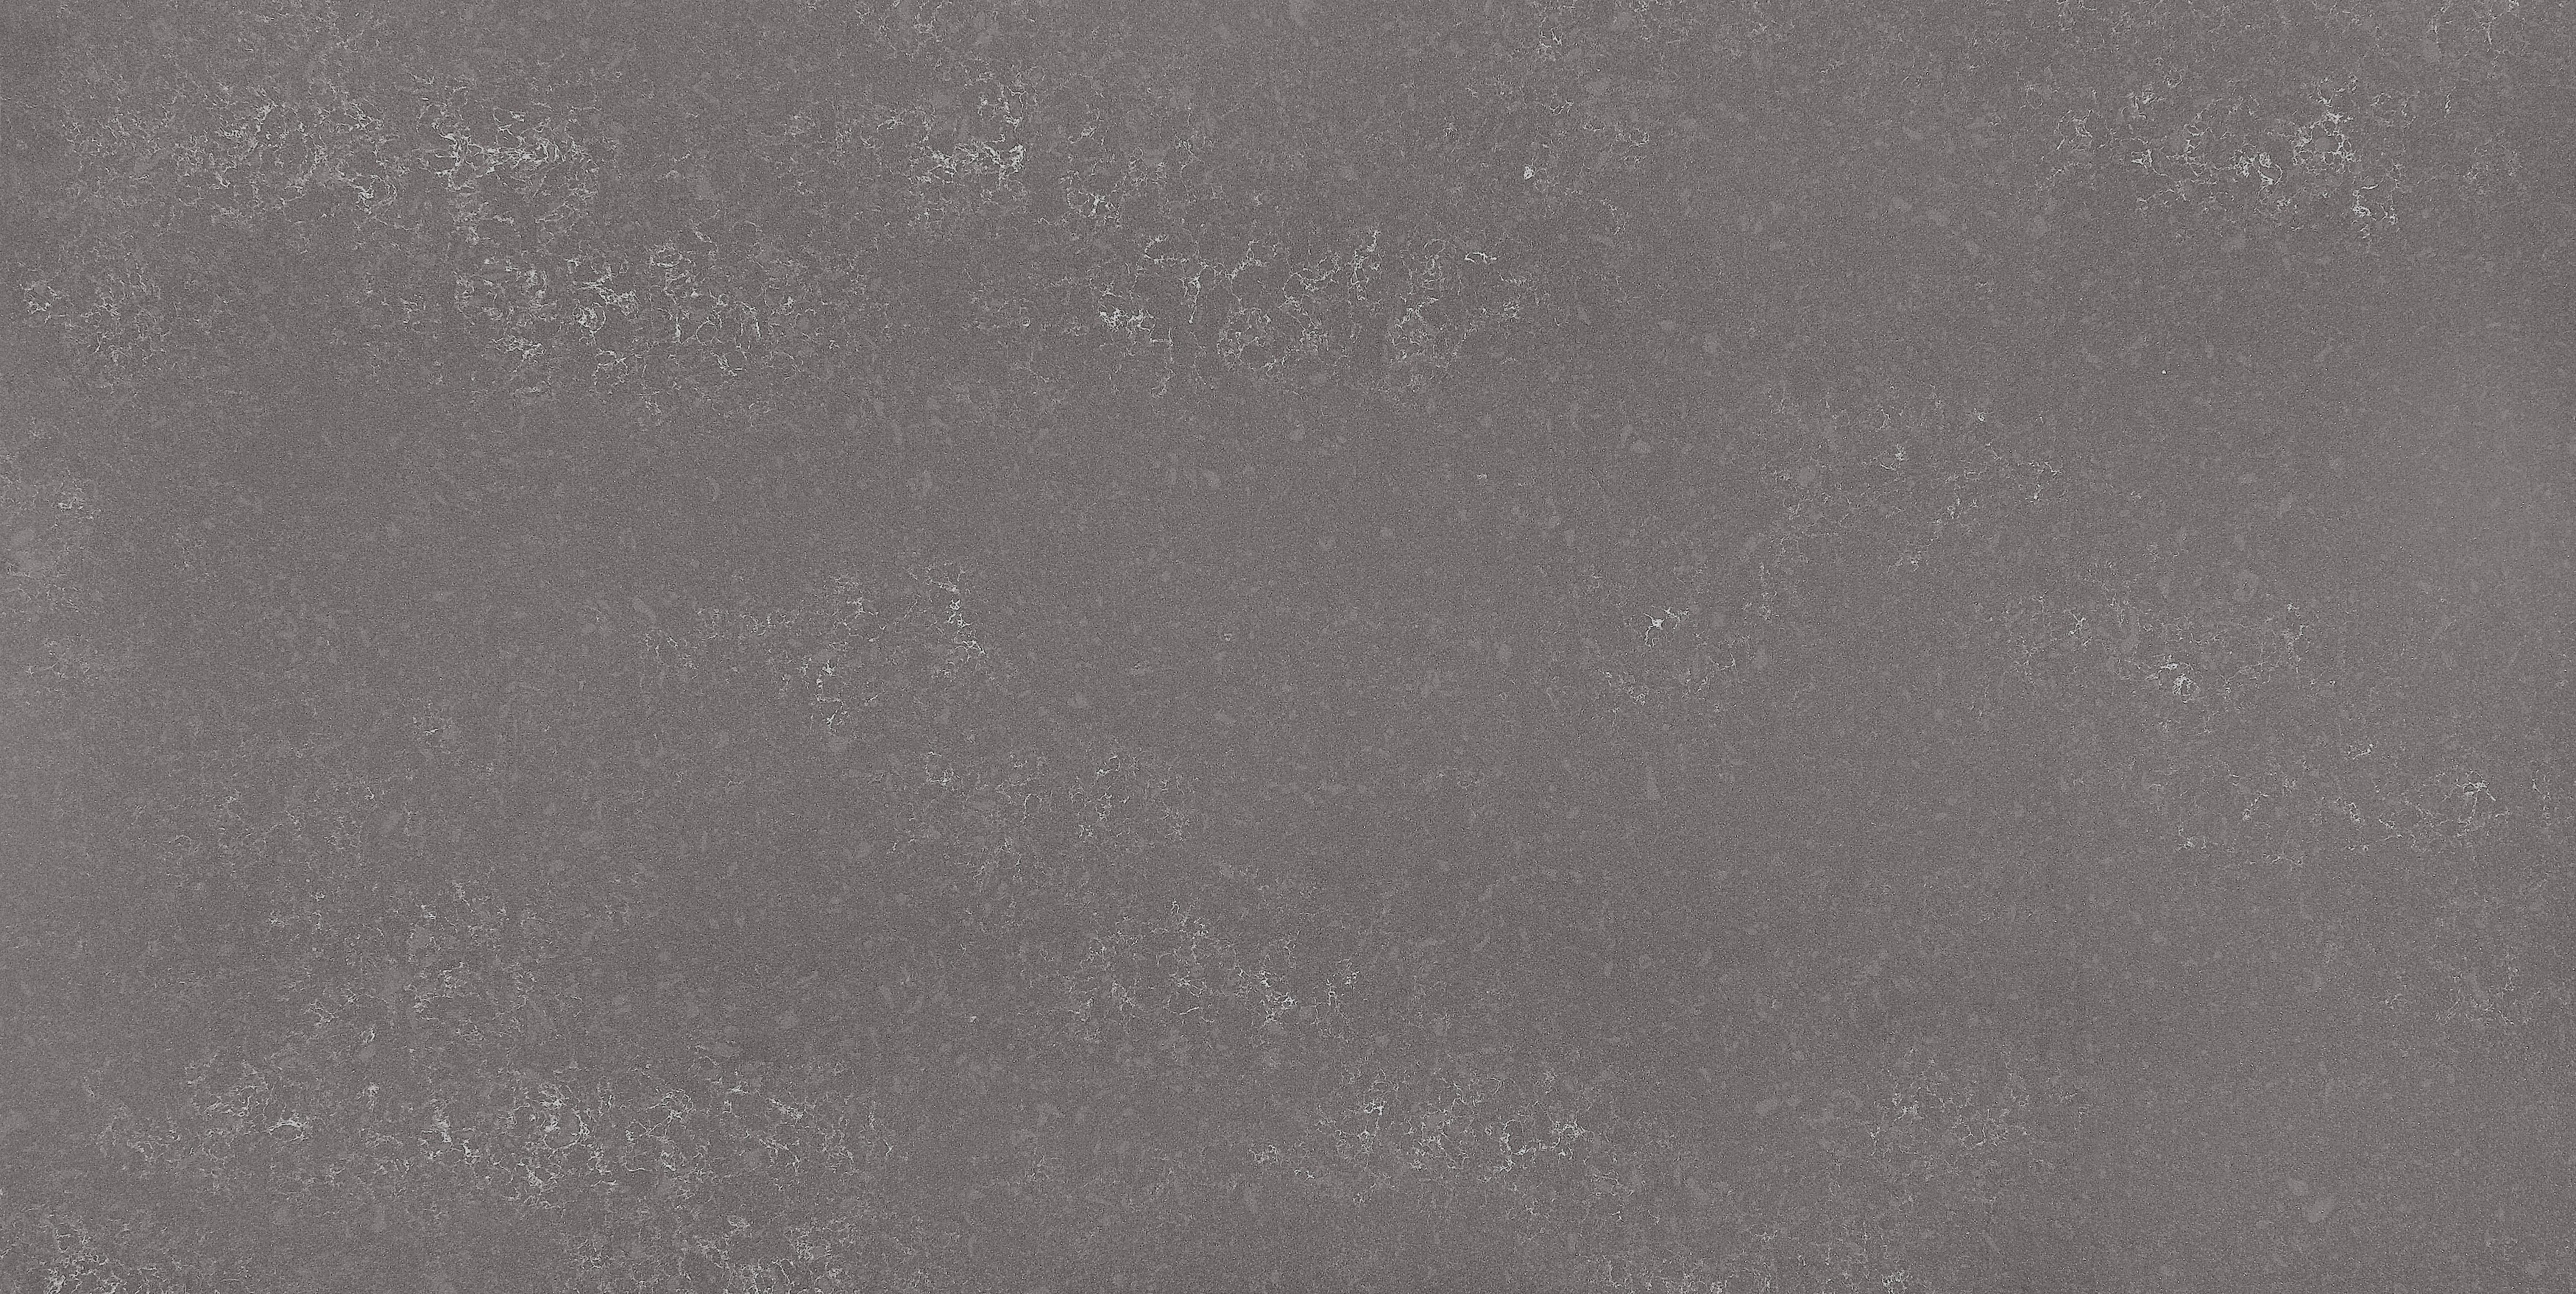 HanStone Quartz Storm warm dark quartz countertop surface with river washed textured finish full slab